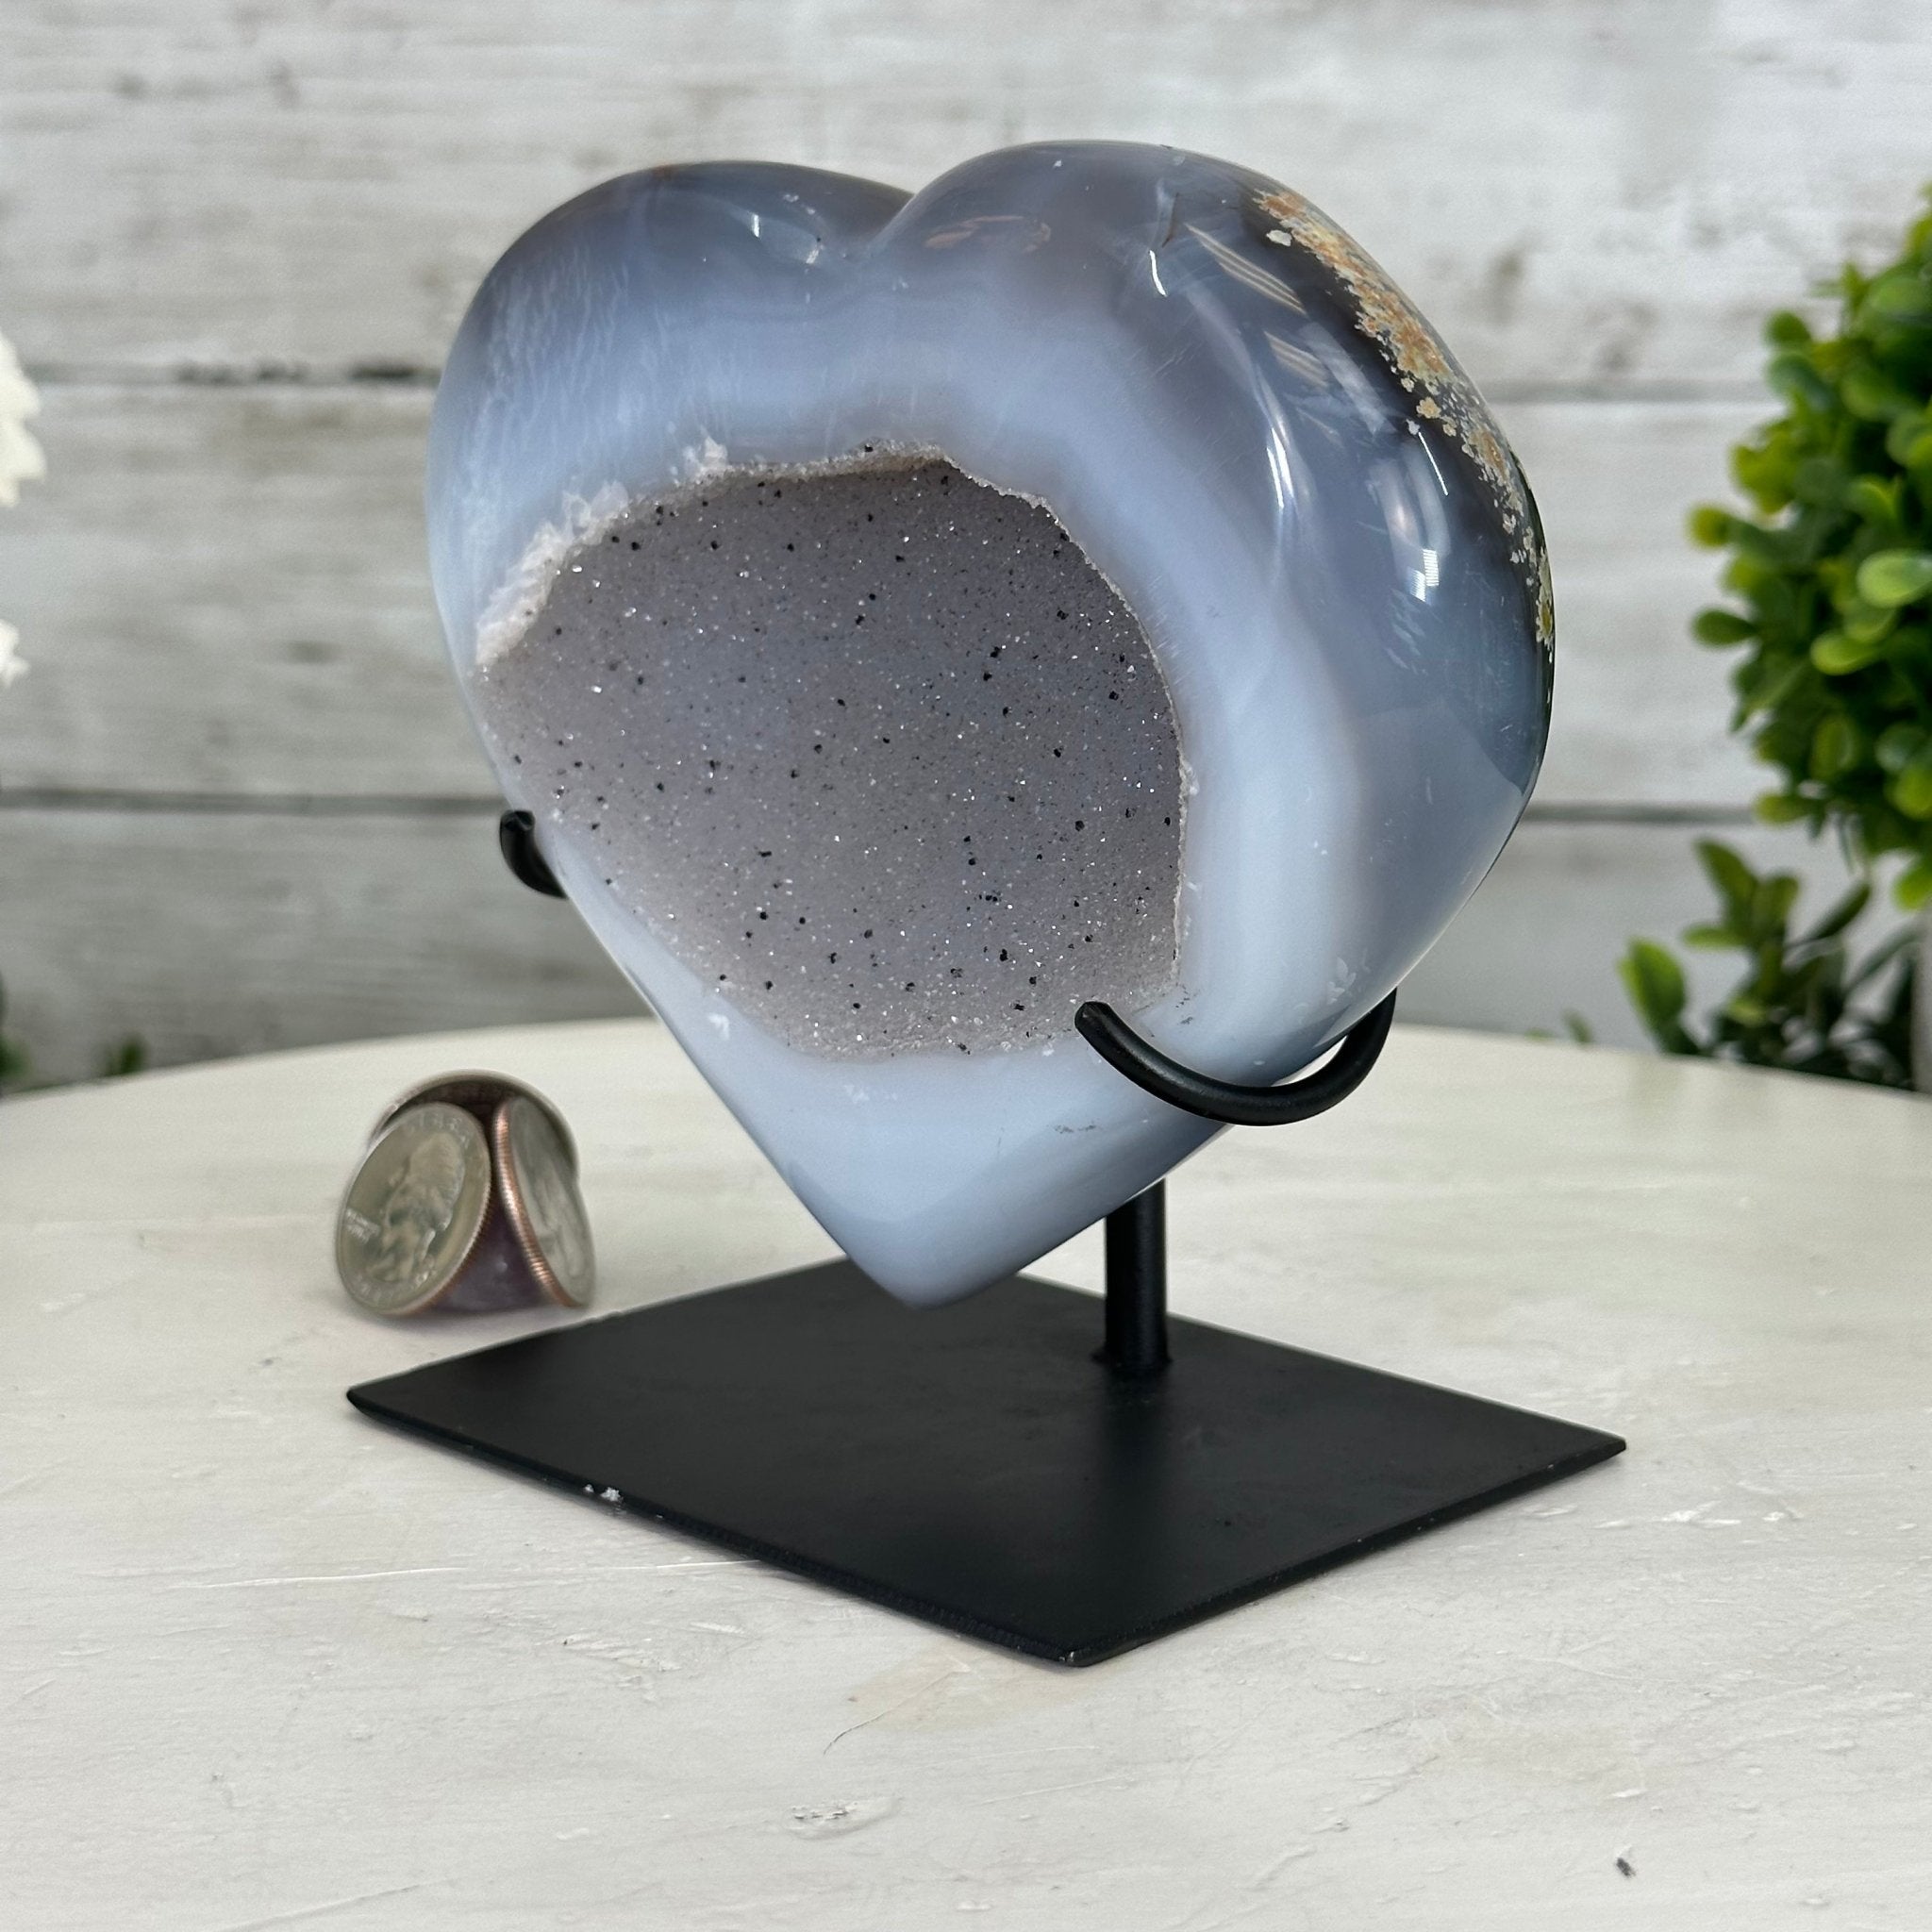 Polished Agate Heart Geode on a Metal Stand, 2.1 lbs & 5" Tall, Model #5468-0063 by Brazil Gems - Brazil GemsBrazil GemsPolished Agate Heart Geode on a Metal Stand, 2.1 lbs & 5" Tall, Model #5468-0063 by Brazil GemsHearts5468-0063